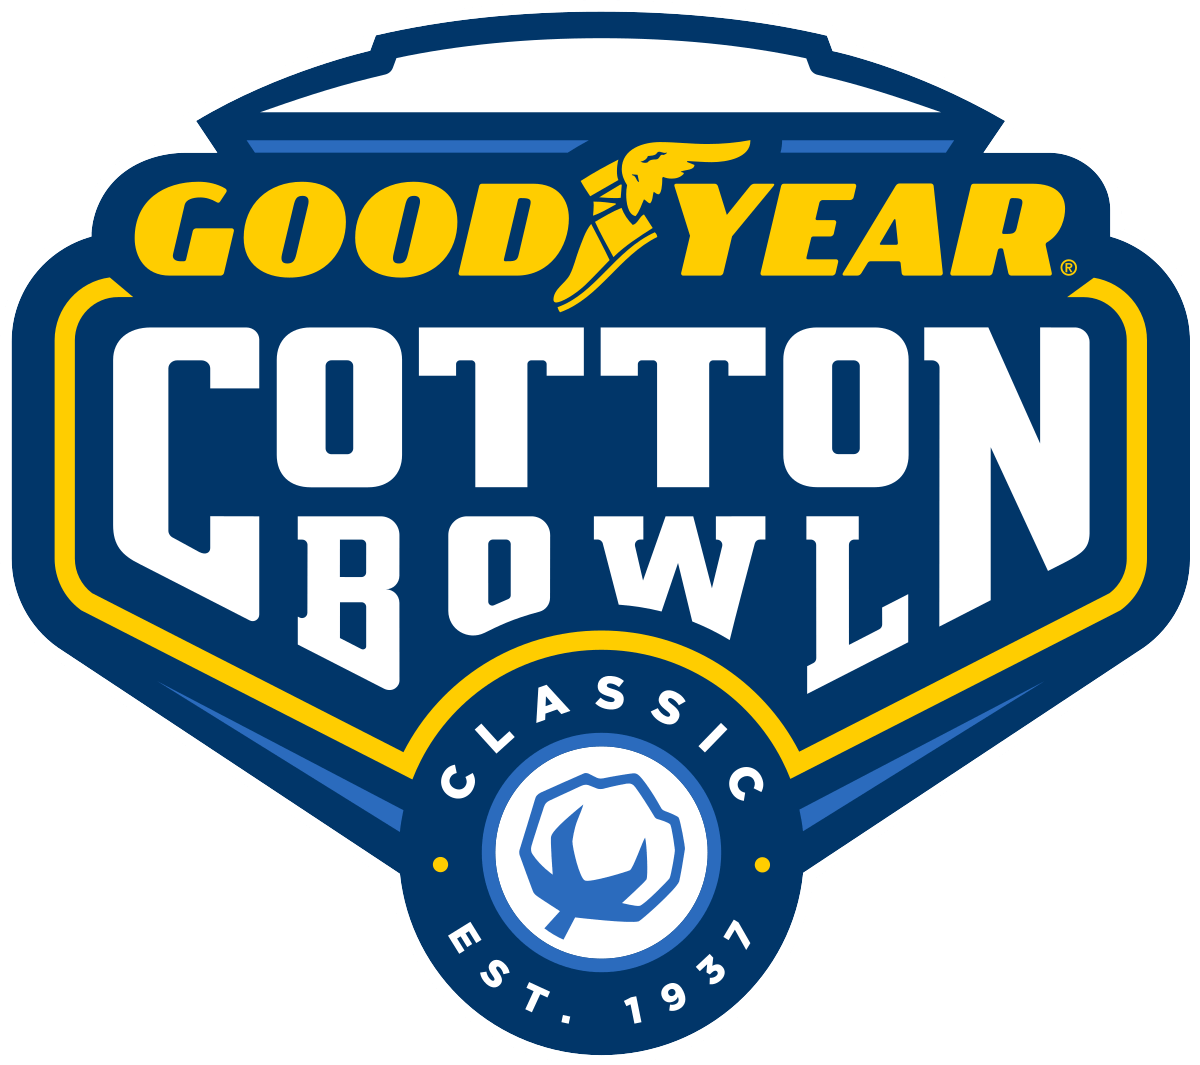 Cotton Bowl Logo - Cotton Bowl Classic